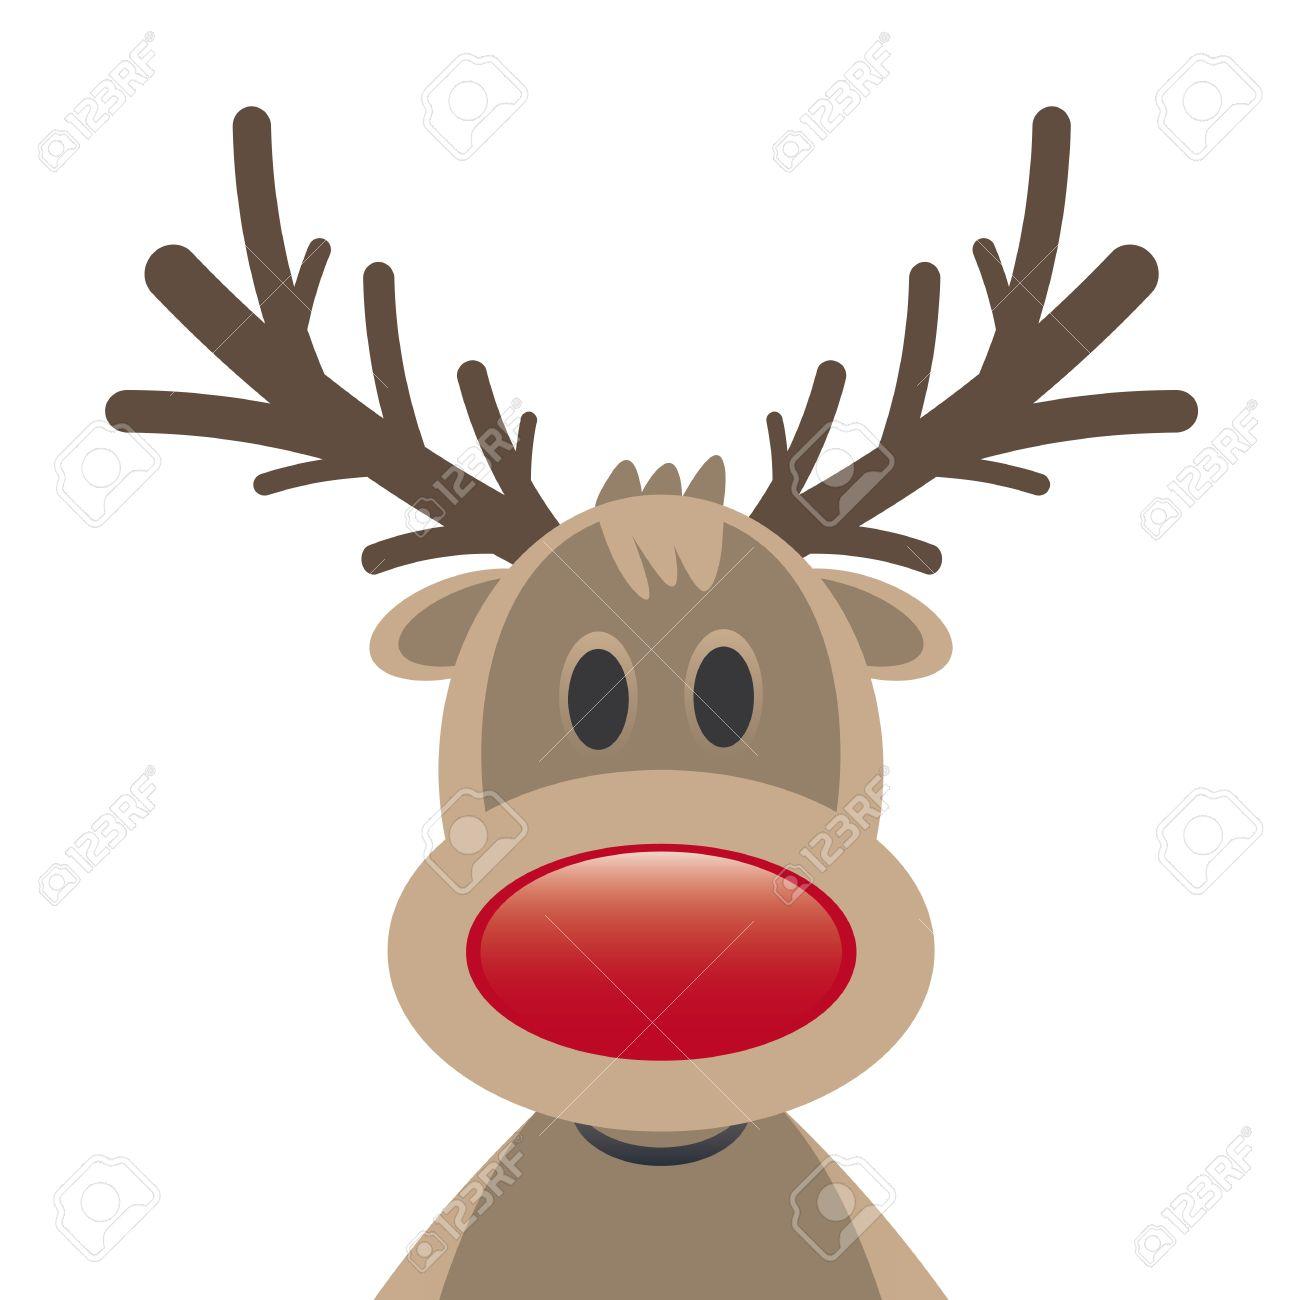 Rudolph Background